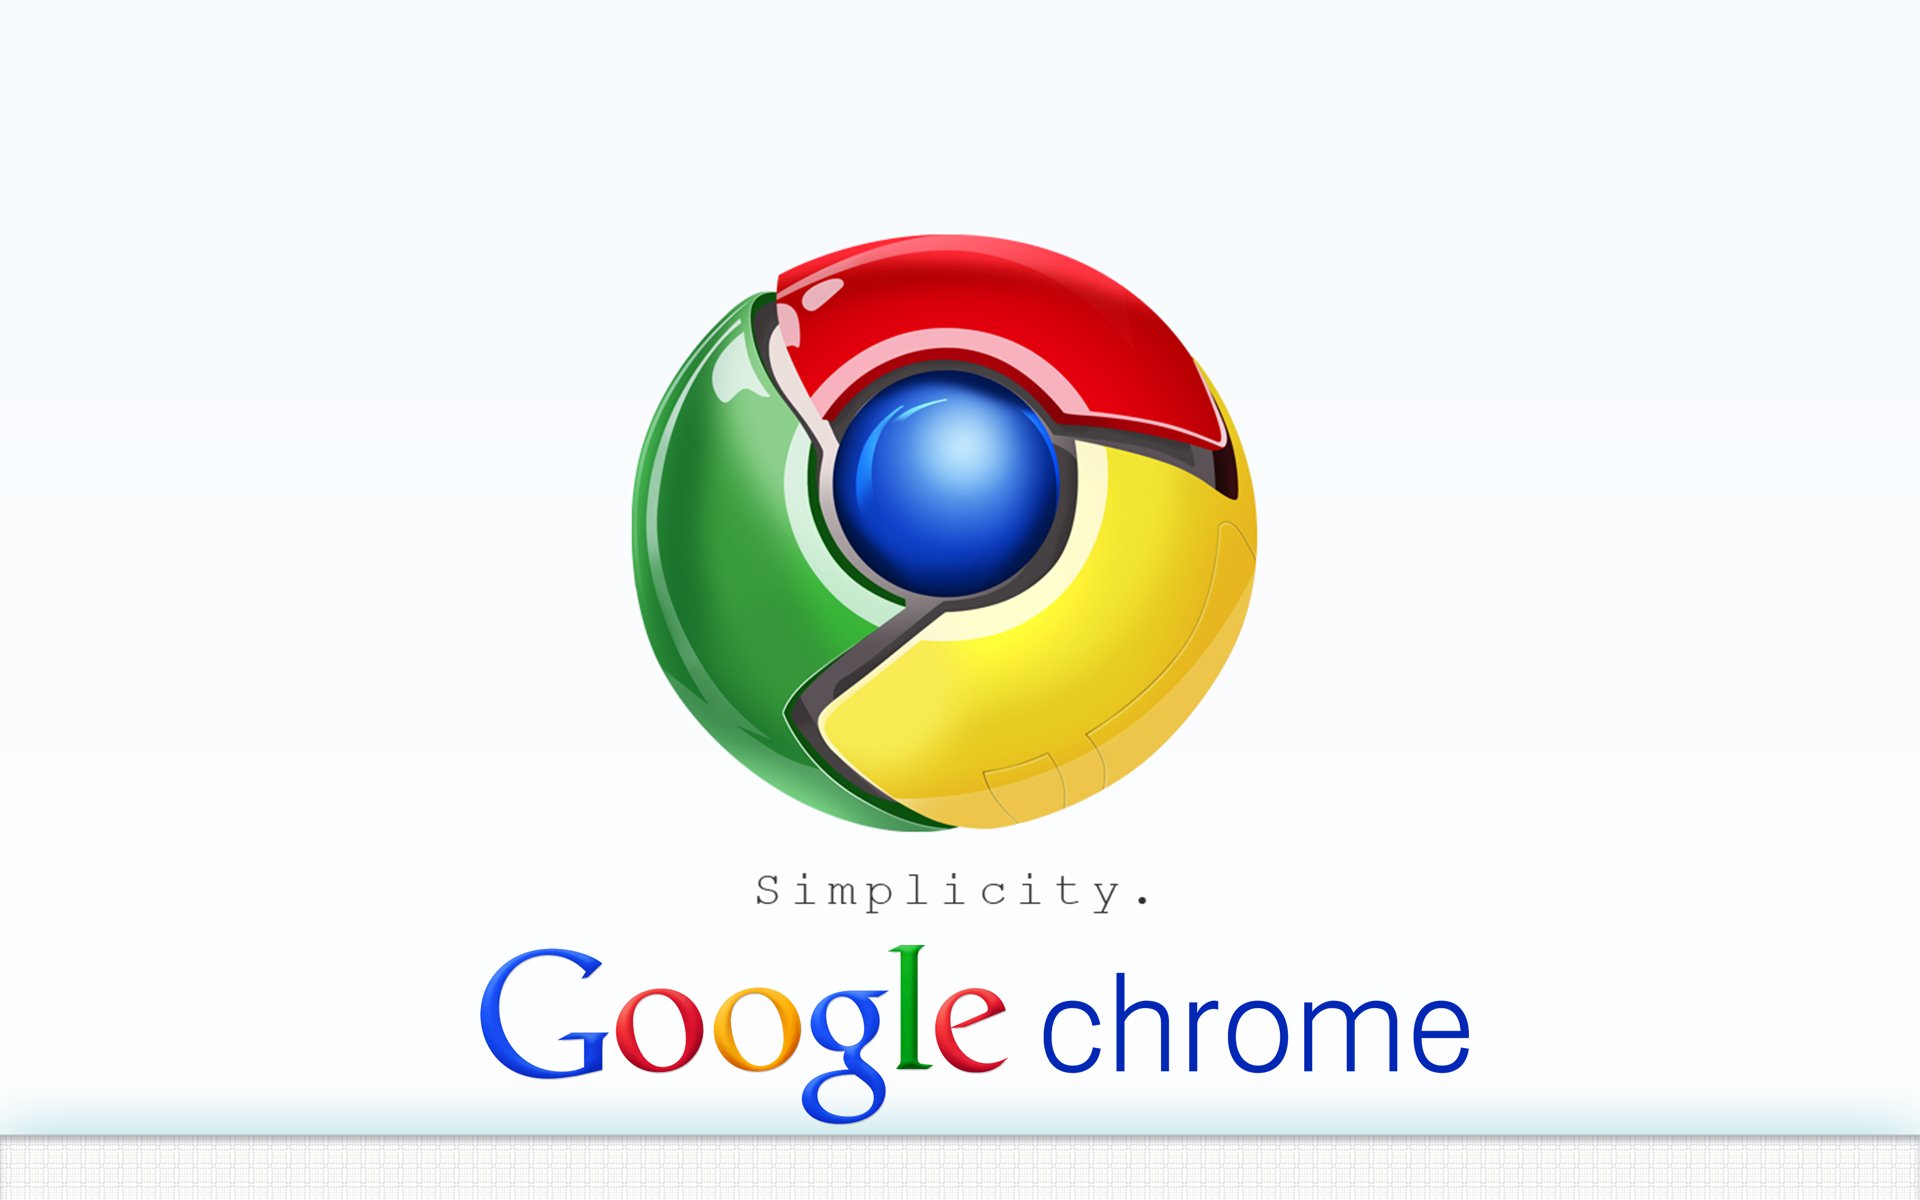 download google chrome windows 7